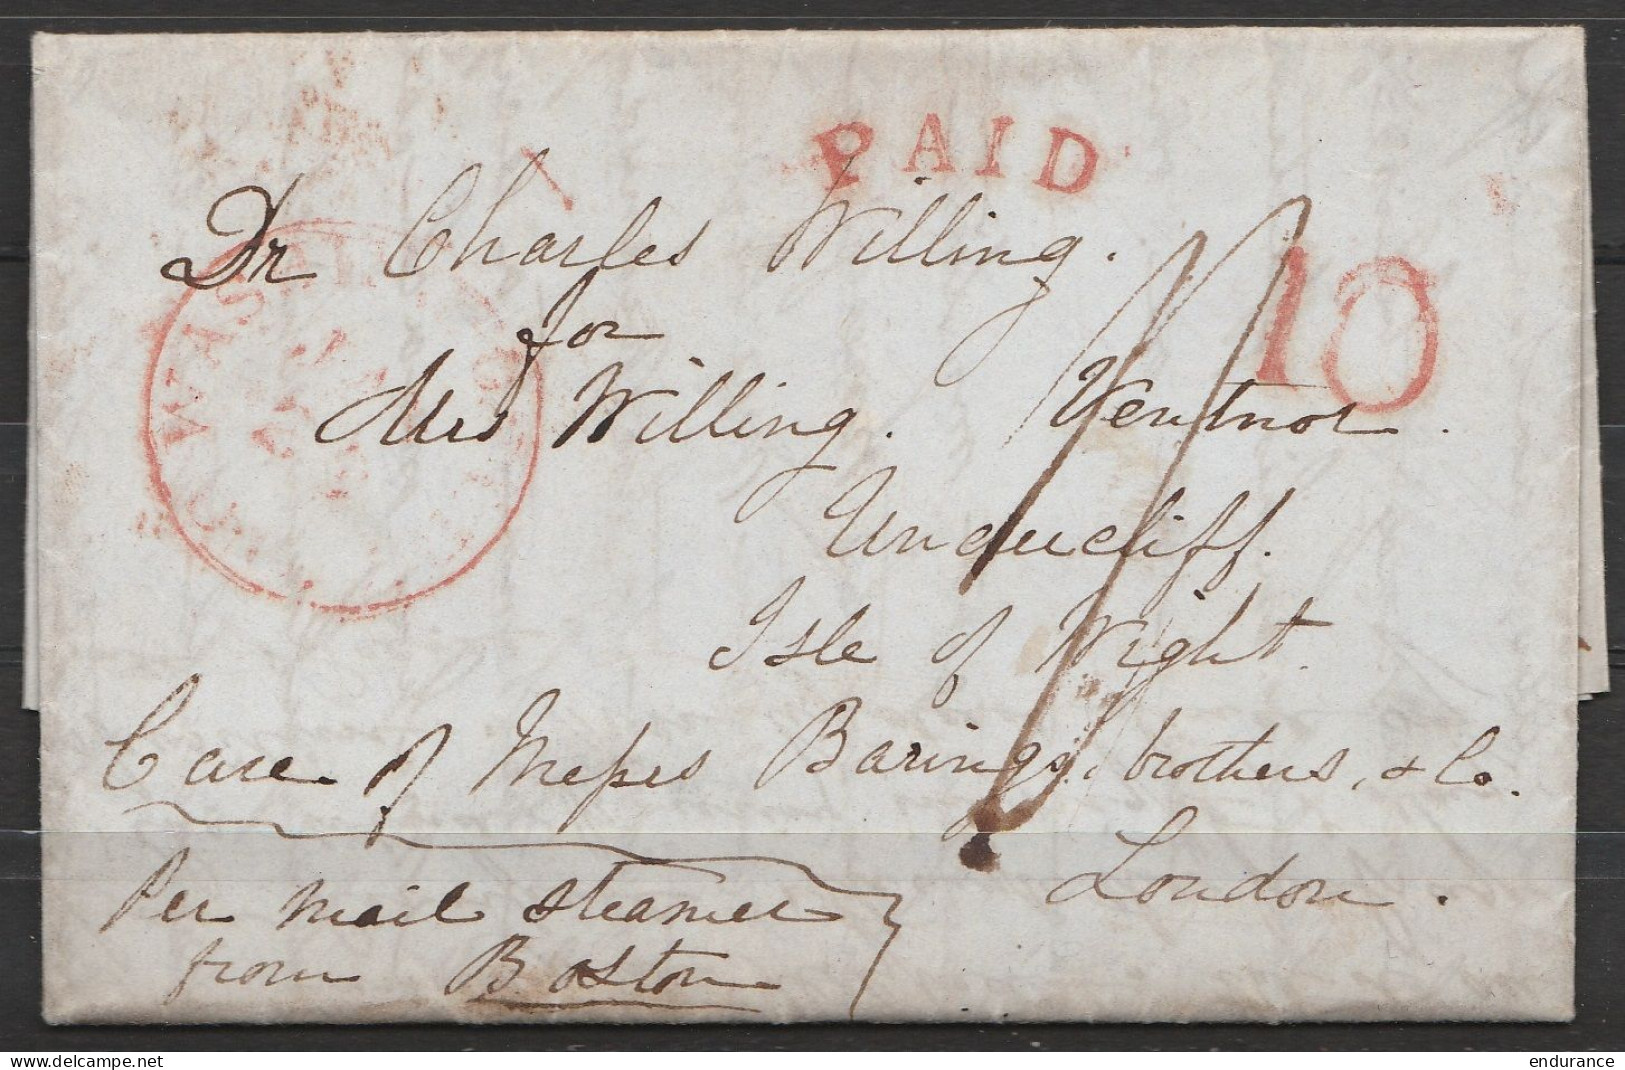 USA - L. Datée 18 Janvier 1847 Càd WASHINGTON /JAN 29 Pour Isle Of WIGHT Via LONDON - Par Mail Steamer From Boston - Gri - Brieven En Documenten